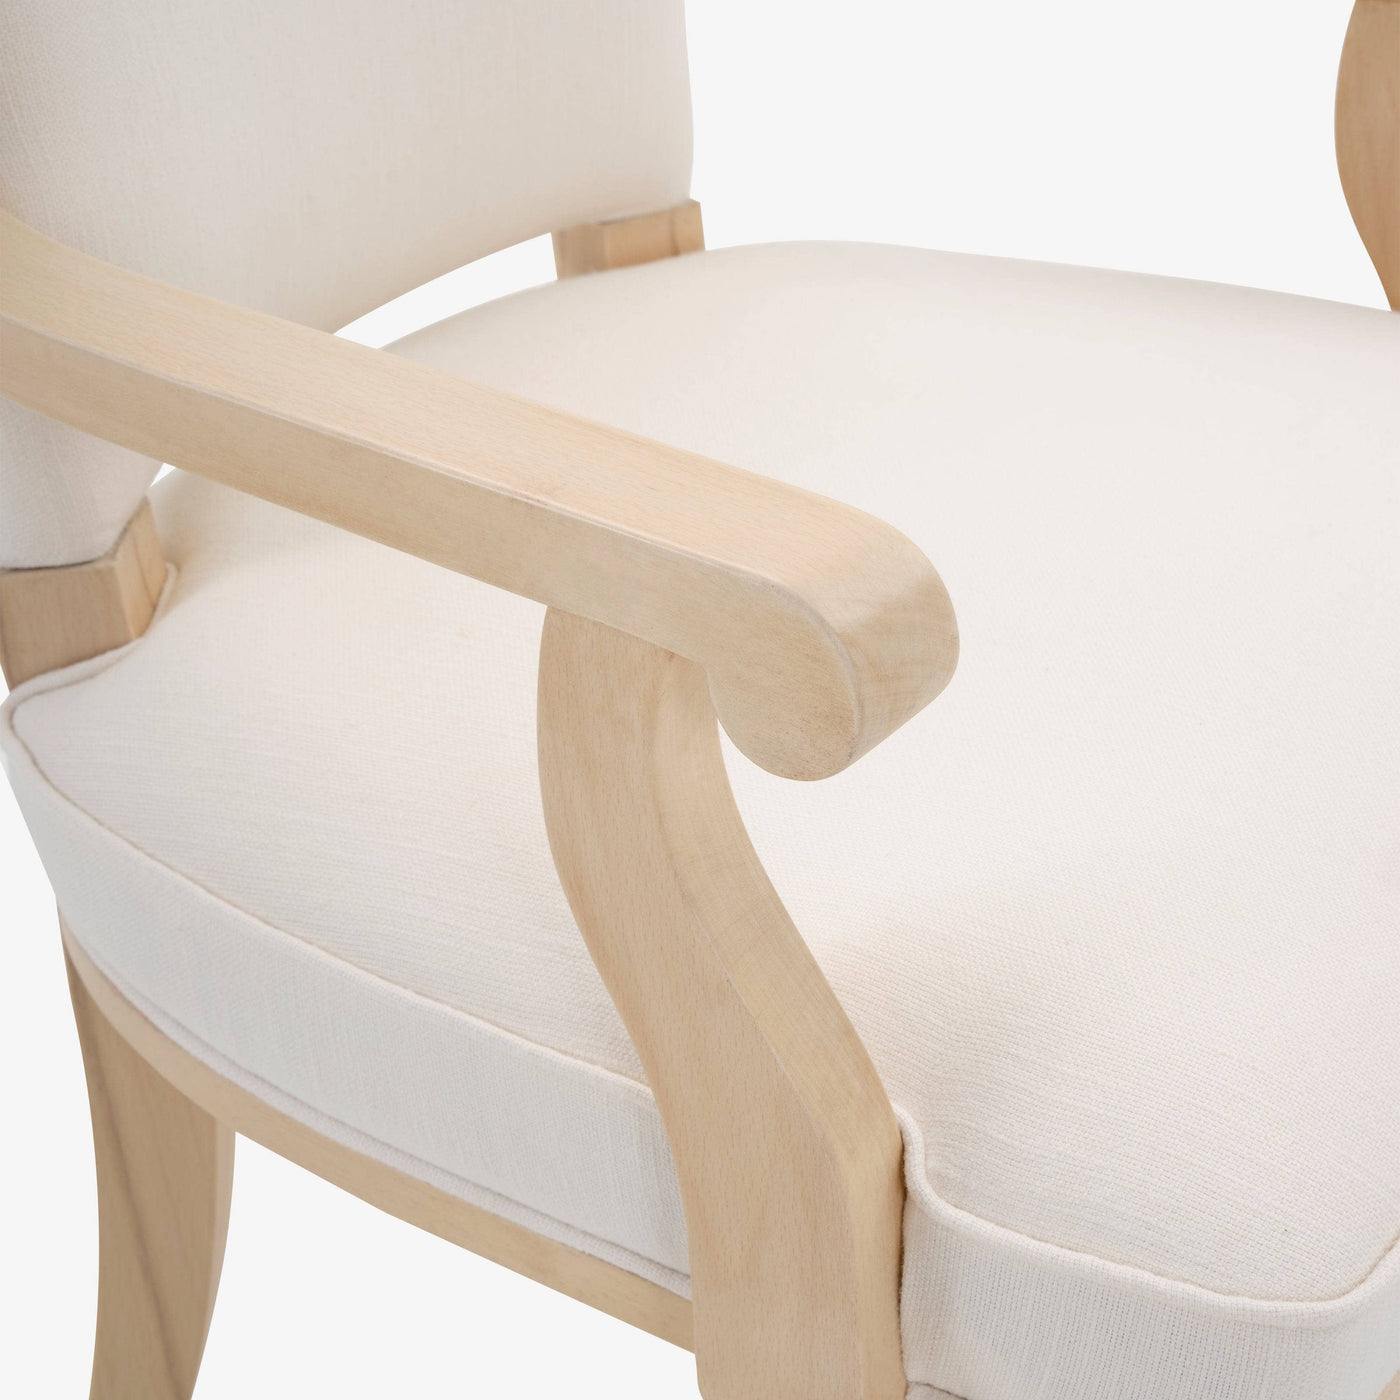 Como Accent Chair, Off-White - Cream Armchairs sazy.com